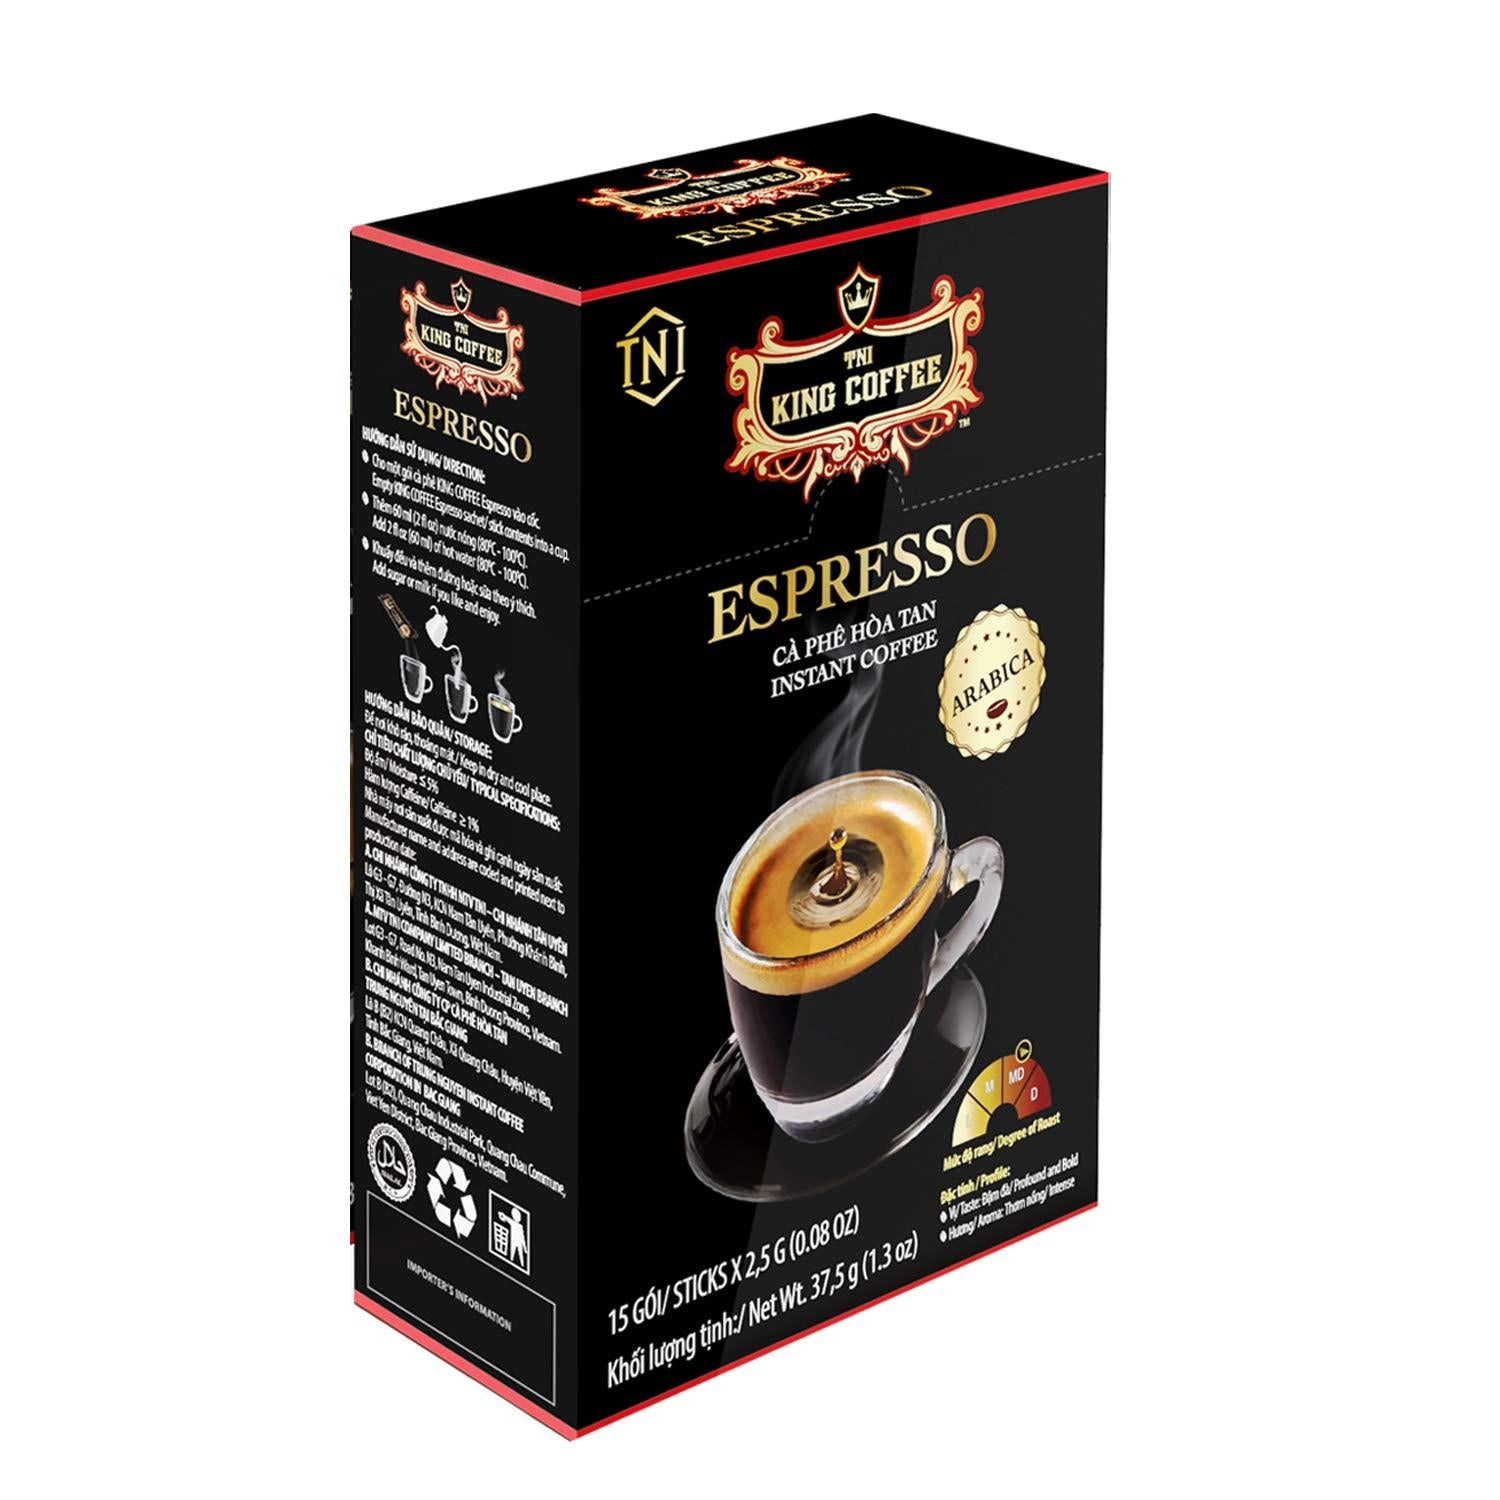 King Coffee Espresso Instant Coffee, Vietnamese Cafe, Arabica, Medium Dark Roast, 15 Packets x 2.5g, Pack of 1